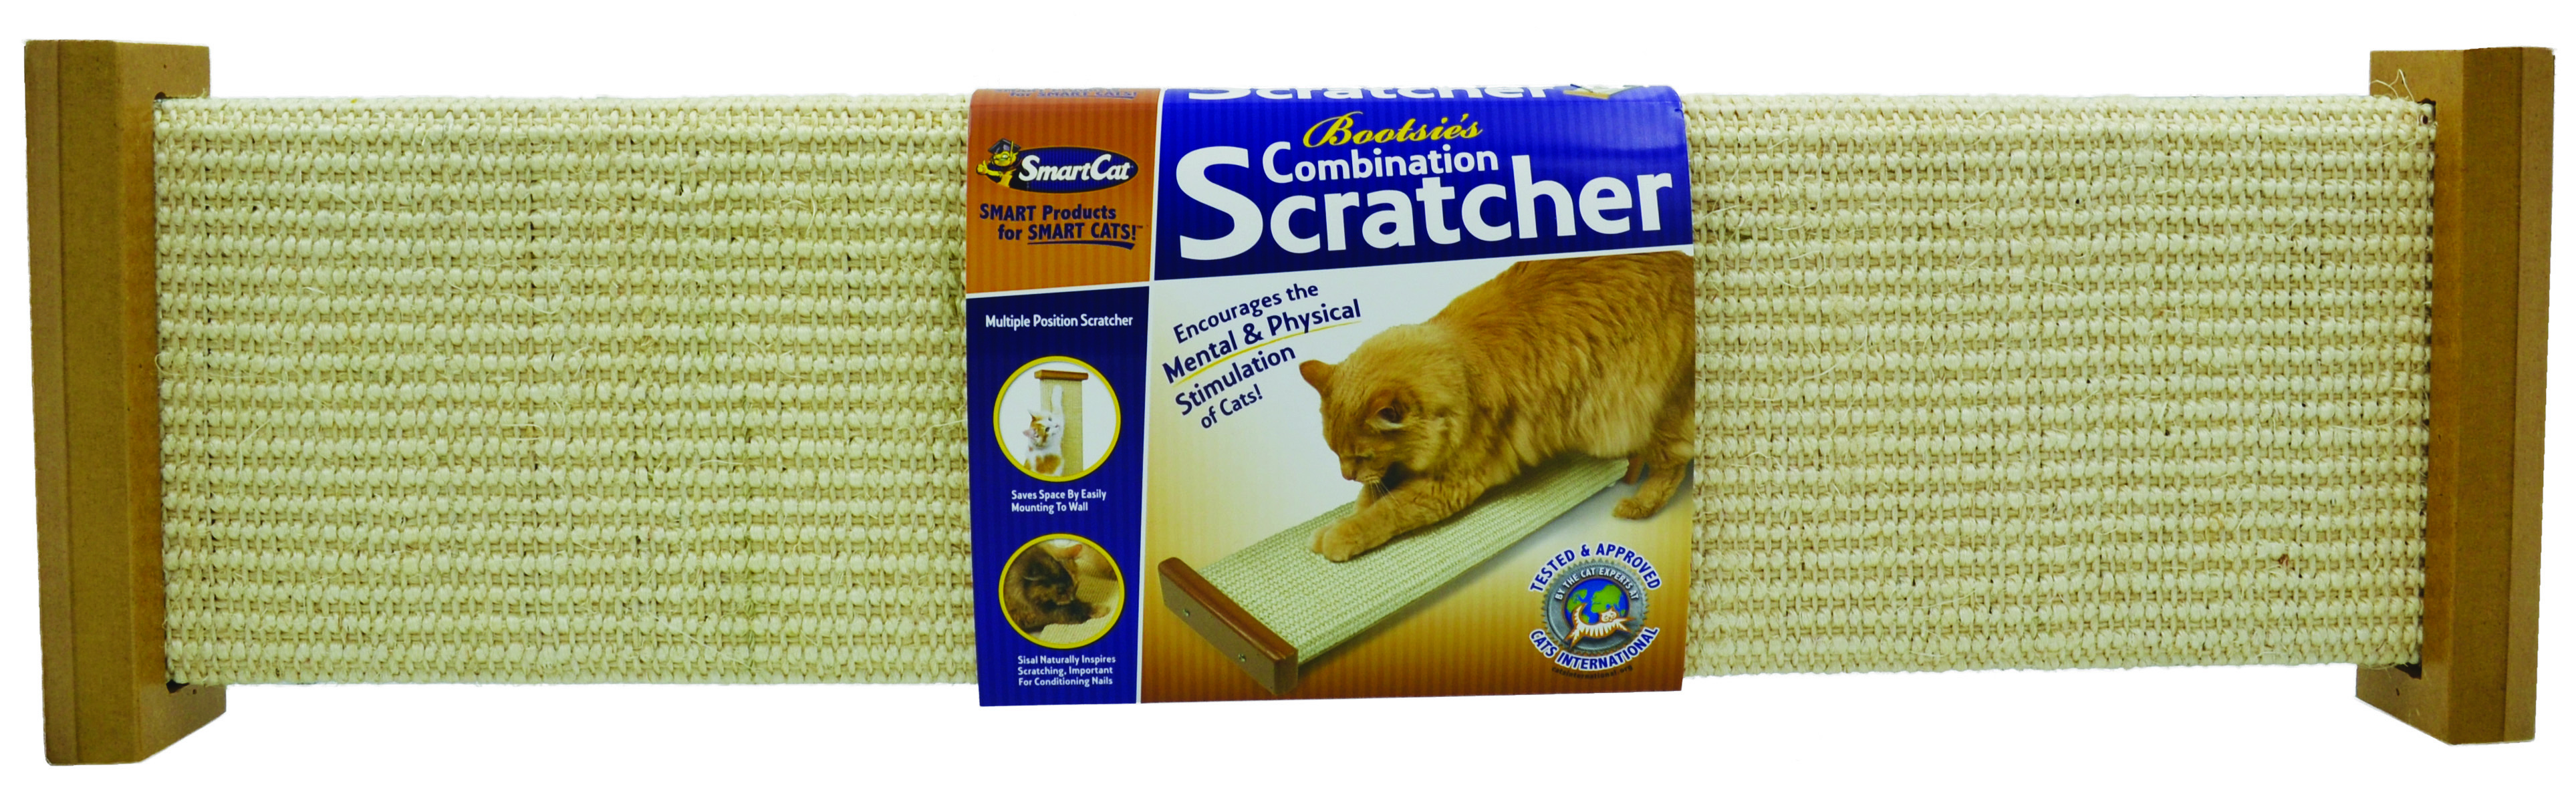 smart cat scratcher